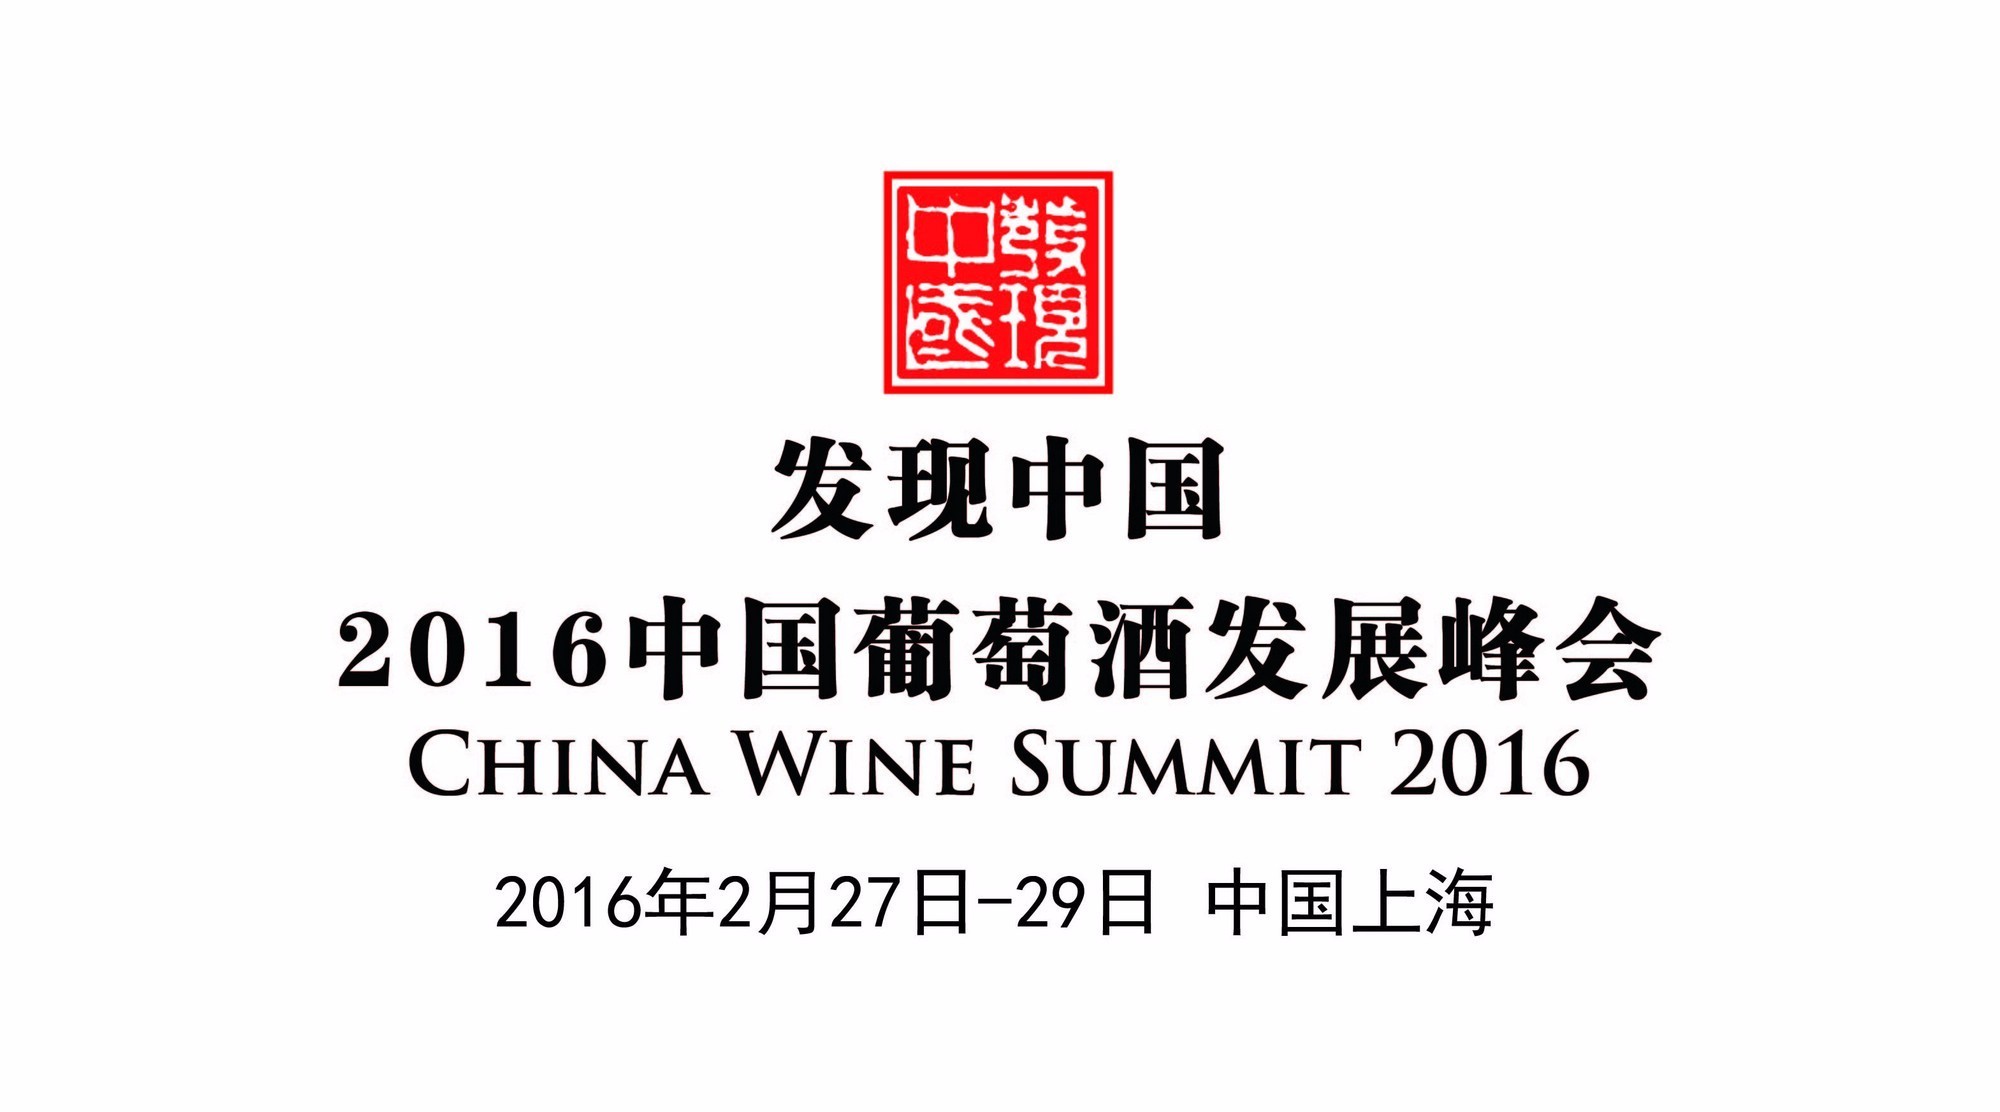 China Wine Summit